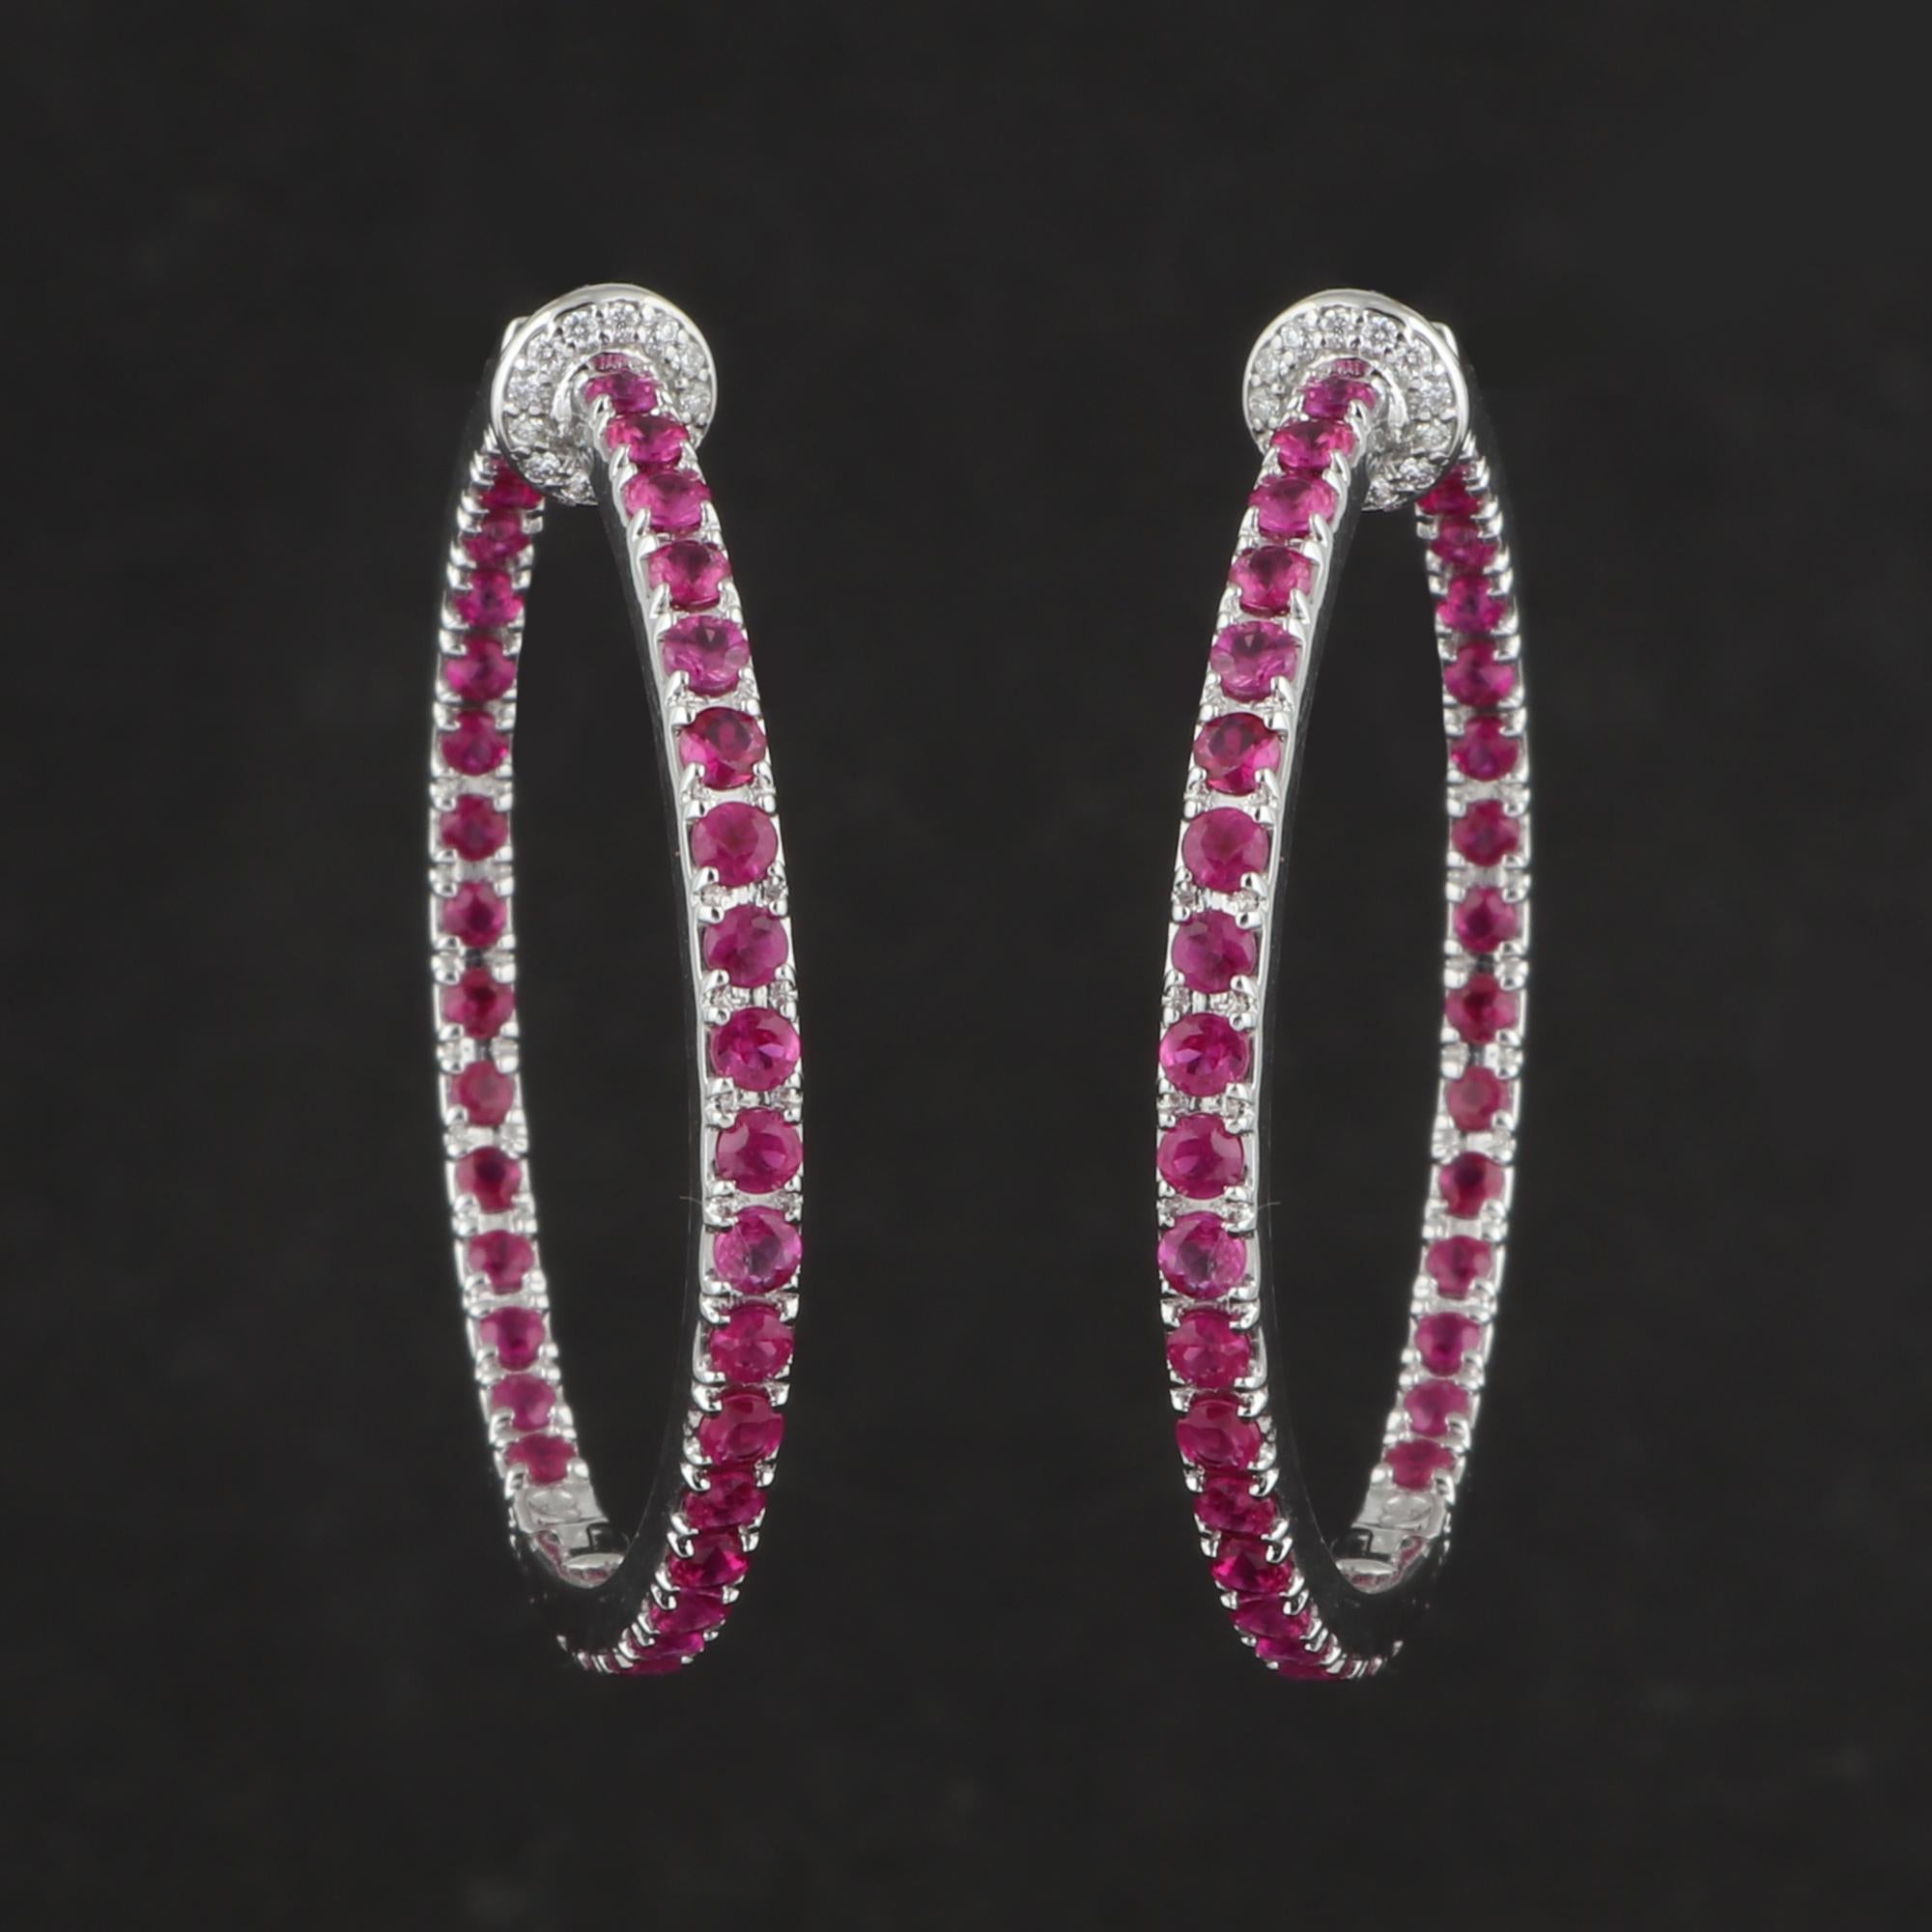 Round Cut Round Ruby Gemstone Hoop Earrings 14 Karat Solid White Gold Handmade Jewelry For Sale